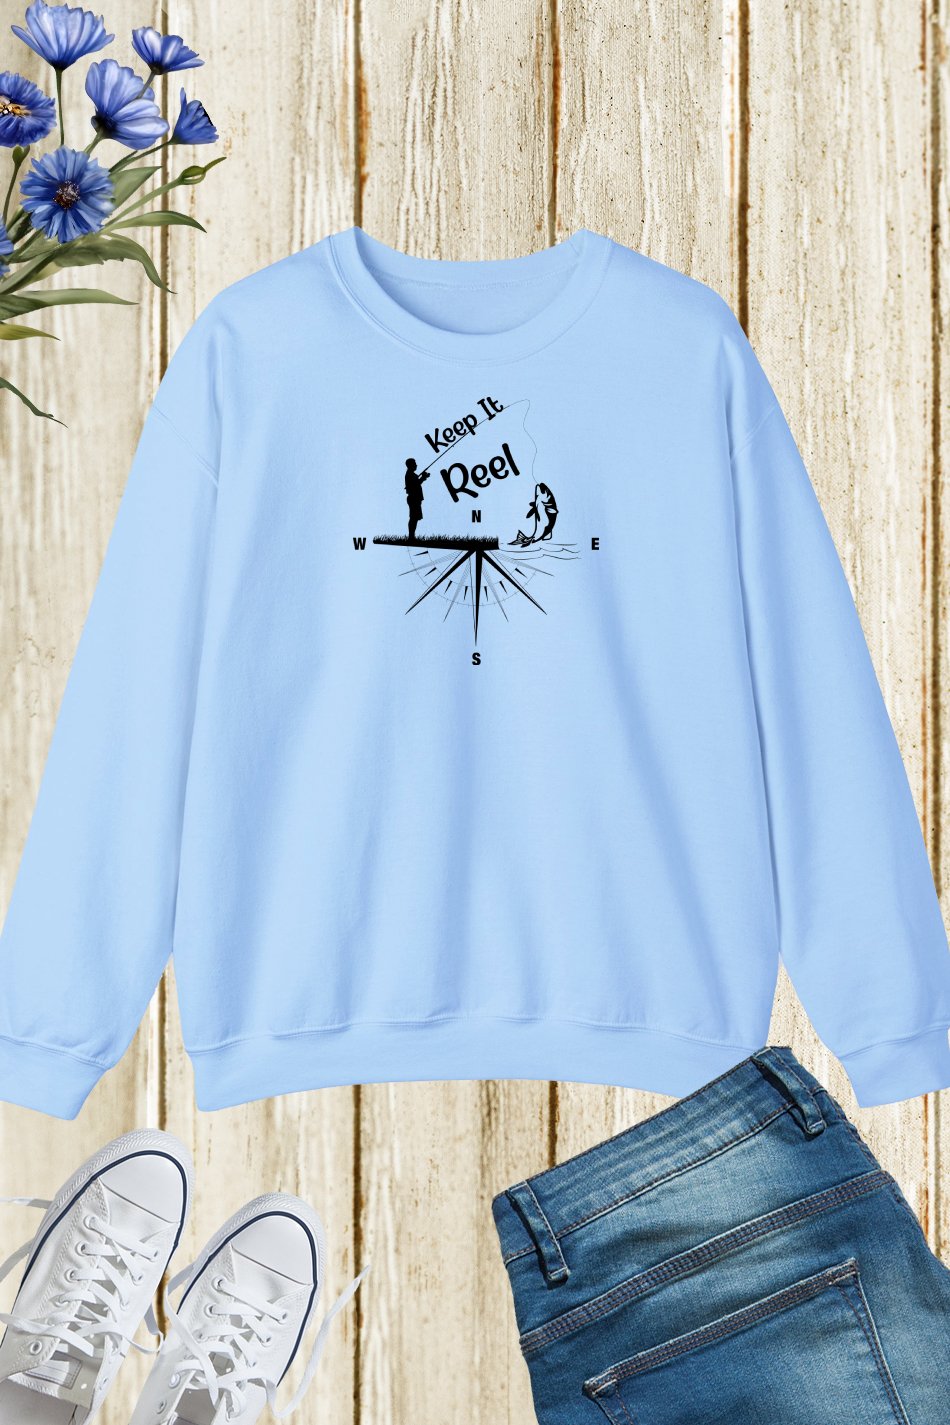 Keep It Reel Men’s Fishing Sweatshirt